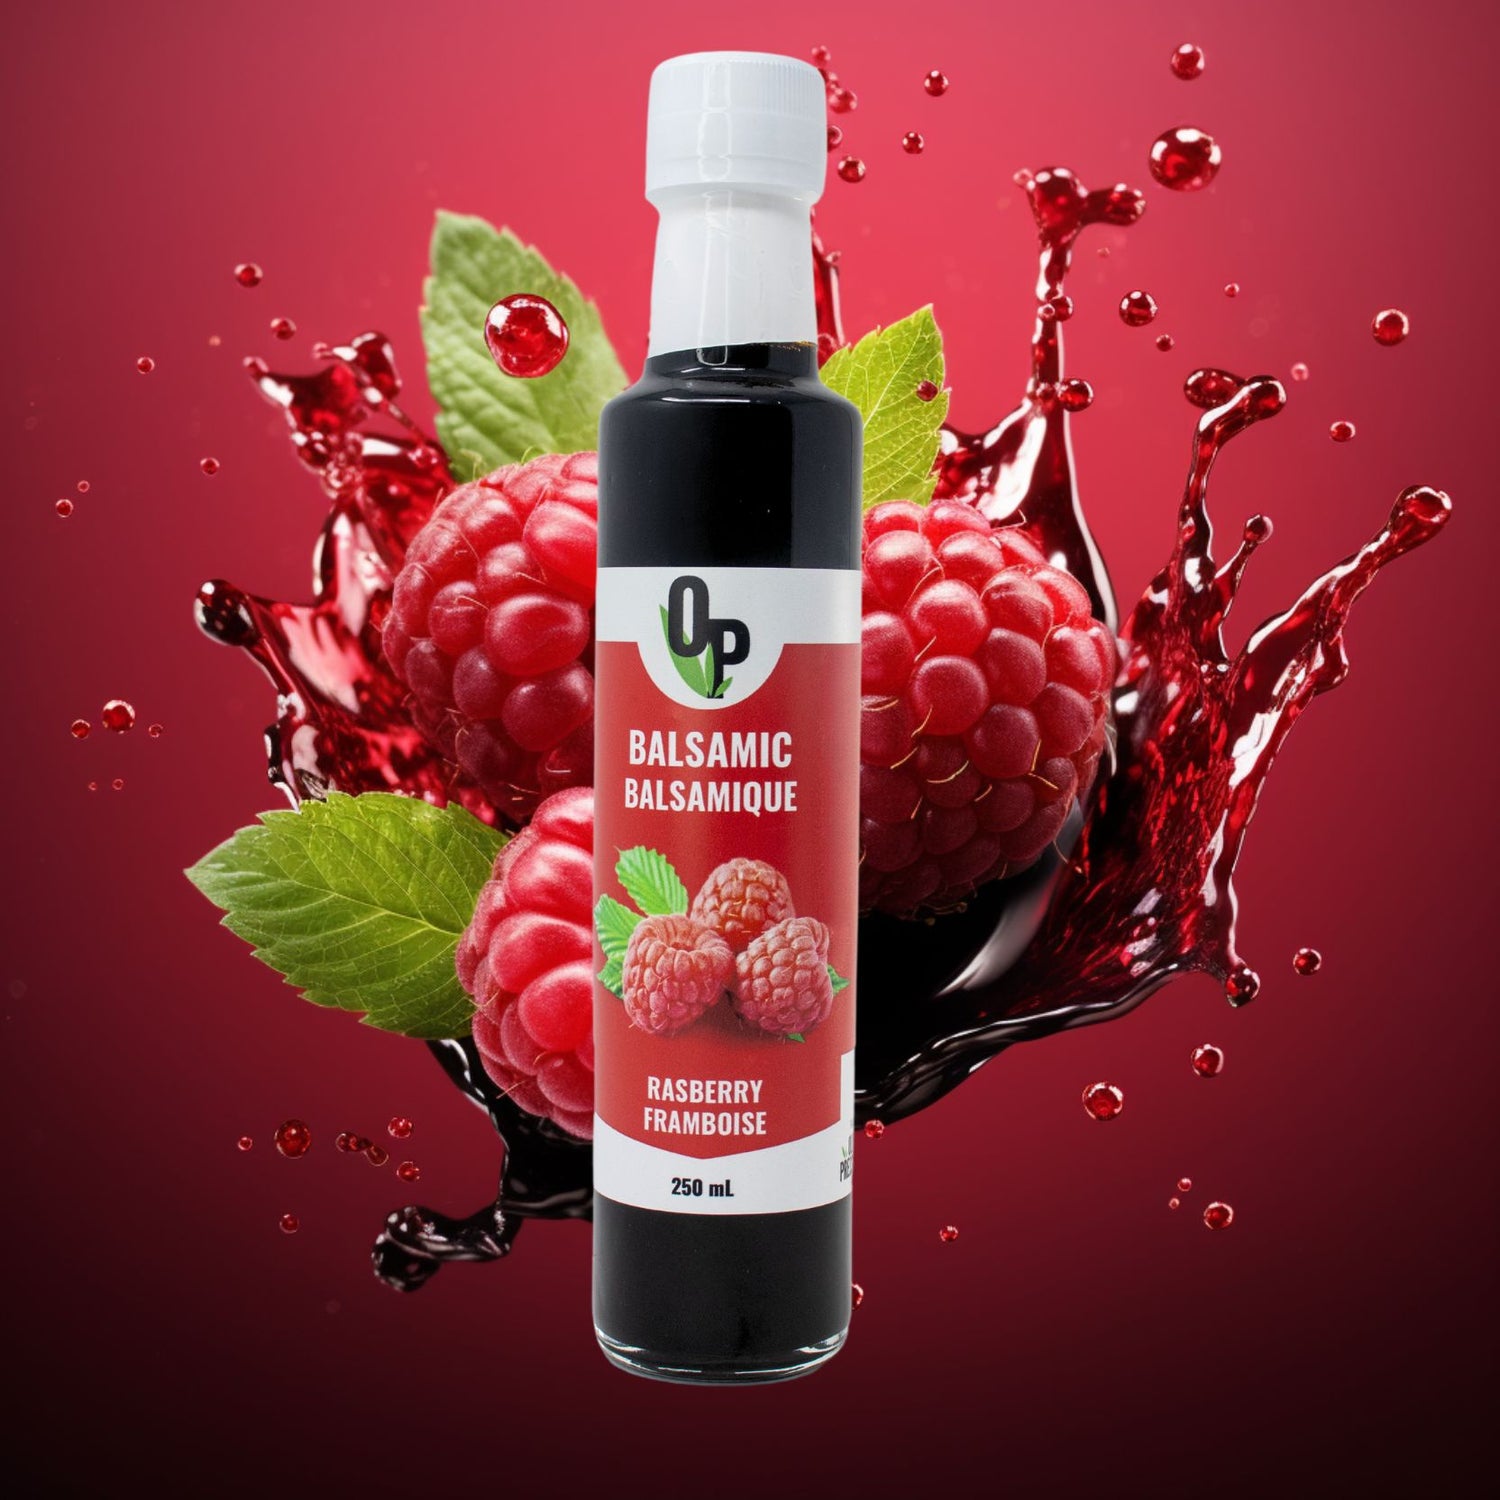 Raspberry infused dark balsamic vinegar